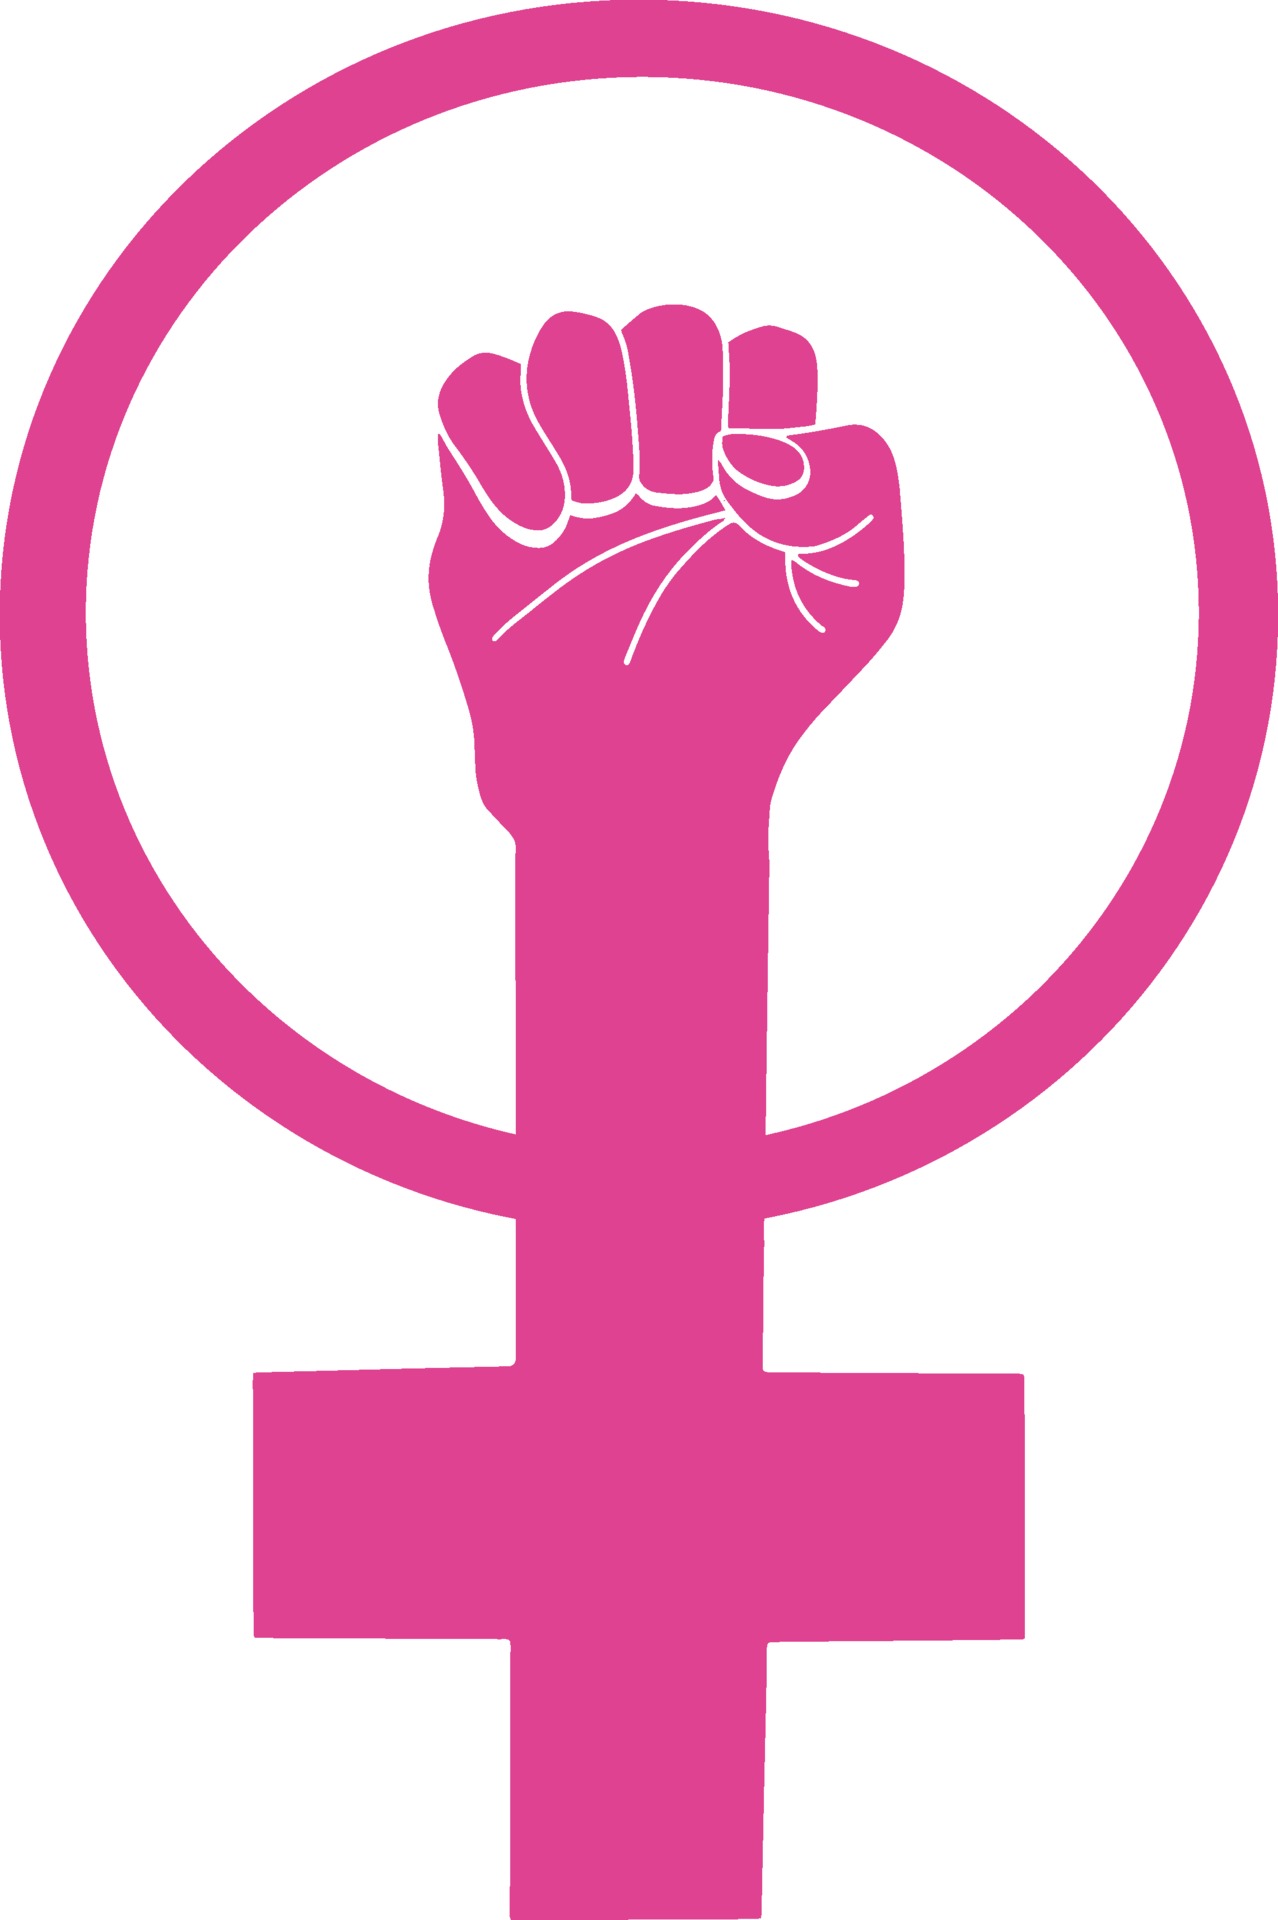 women's reproductive rights symbol